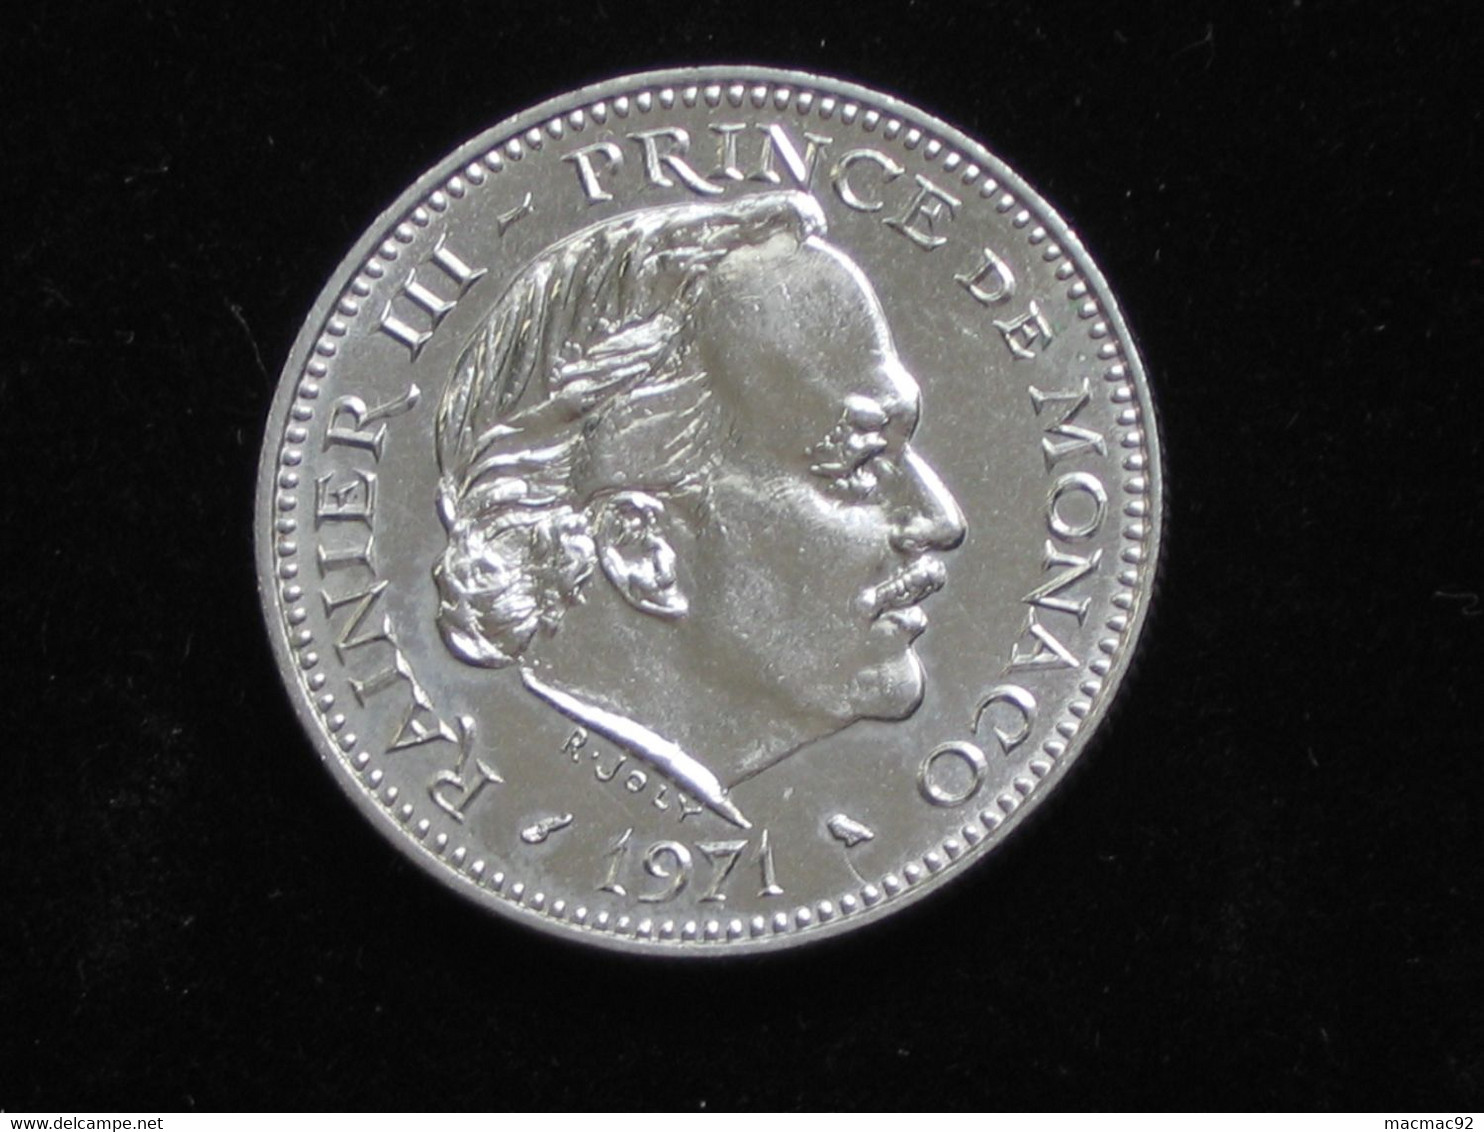 MONACO - 5 Frs 1971 - Rainier III Prince De Monaco **** EN ACHAT IMMEDIAT **** - 1949-1956 Old Francs